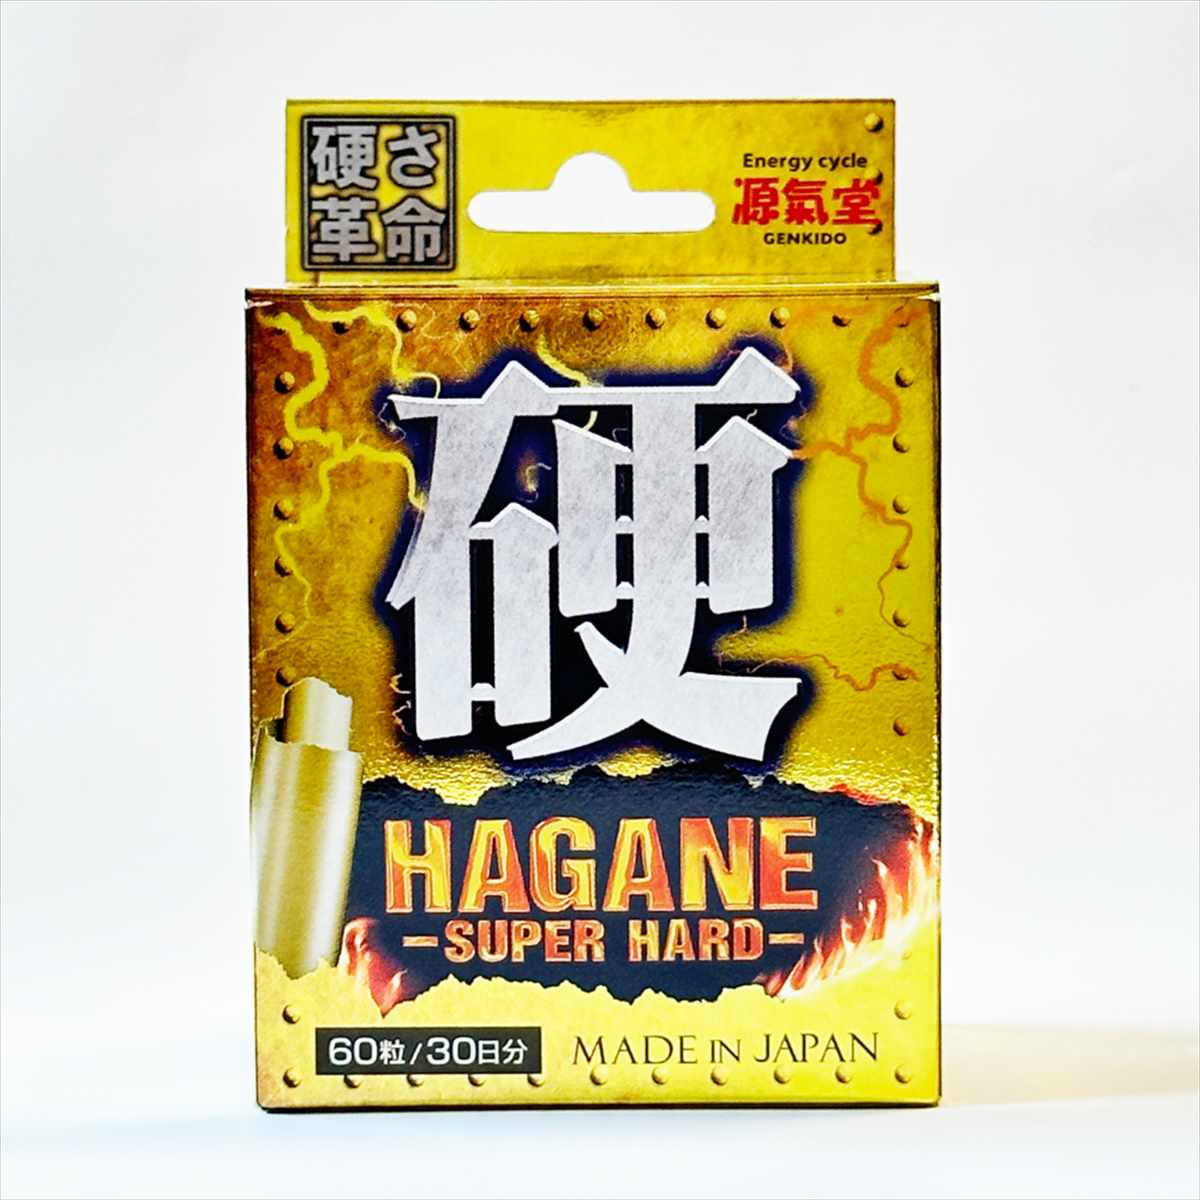 HAGANE -SUPER HARD-